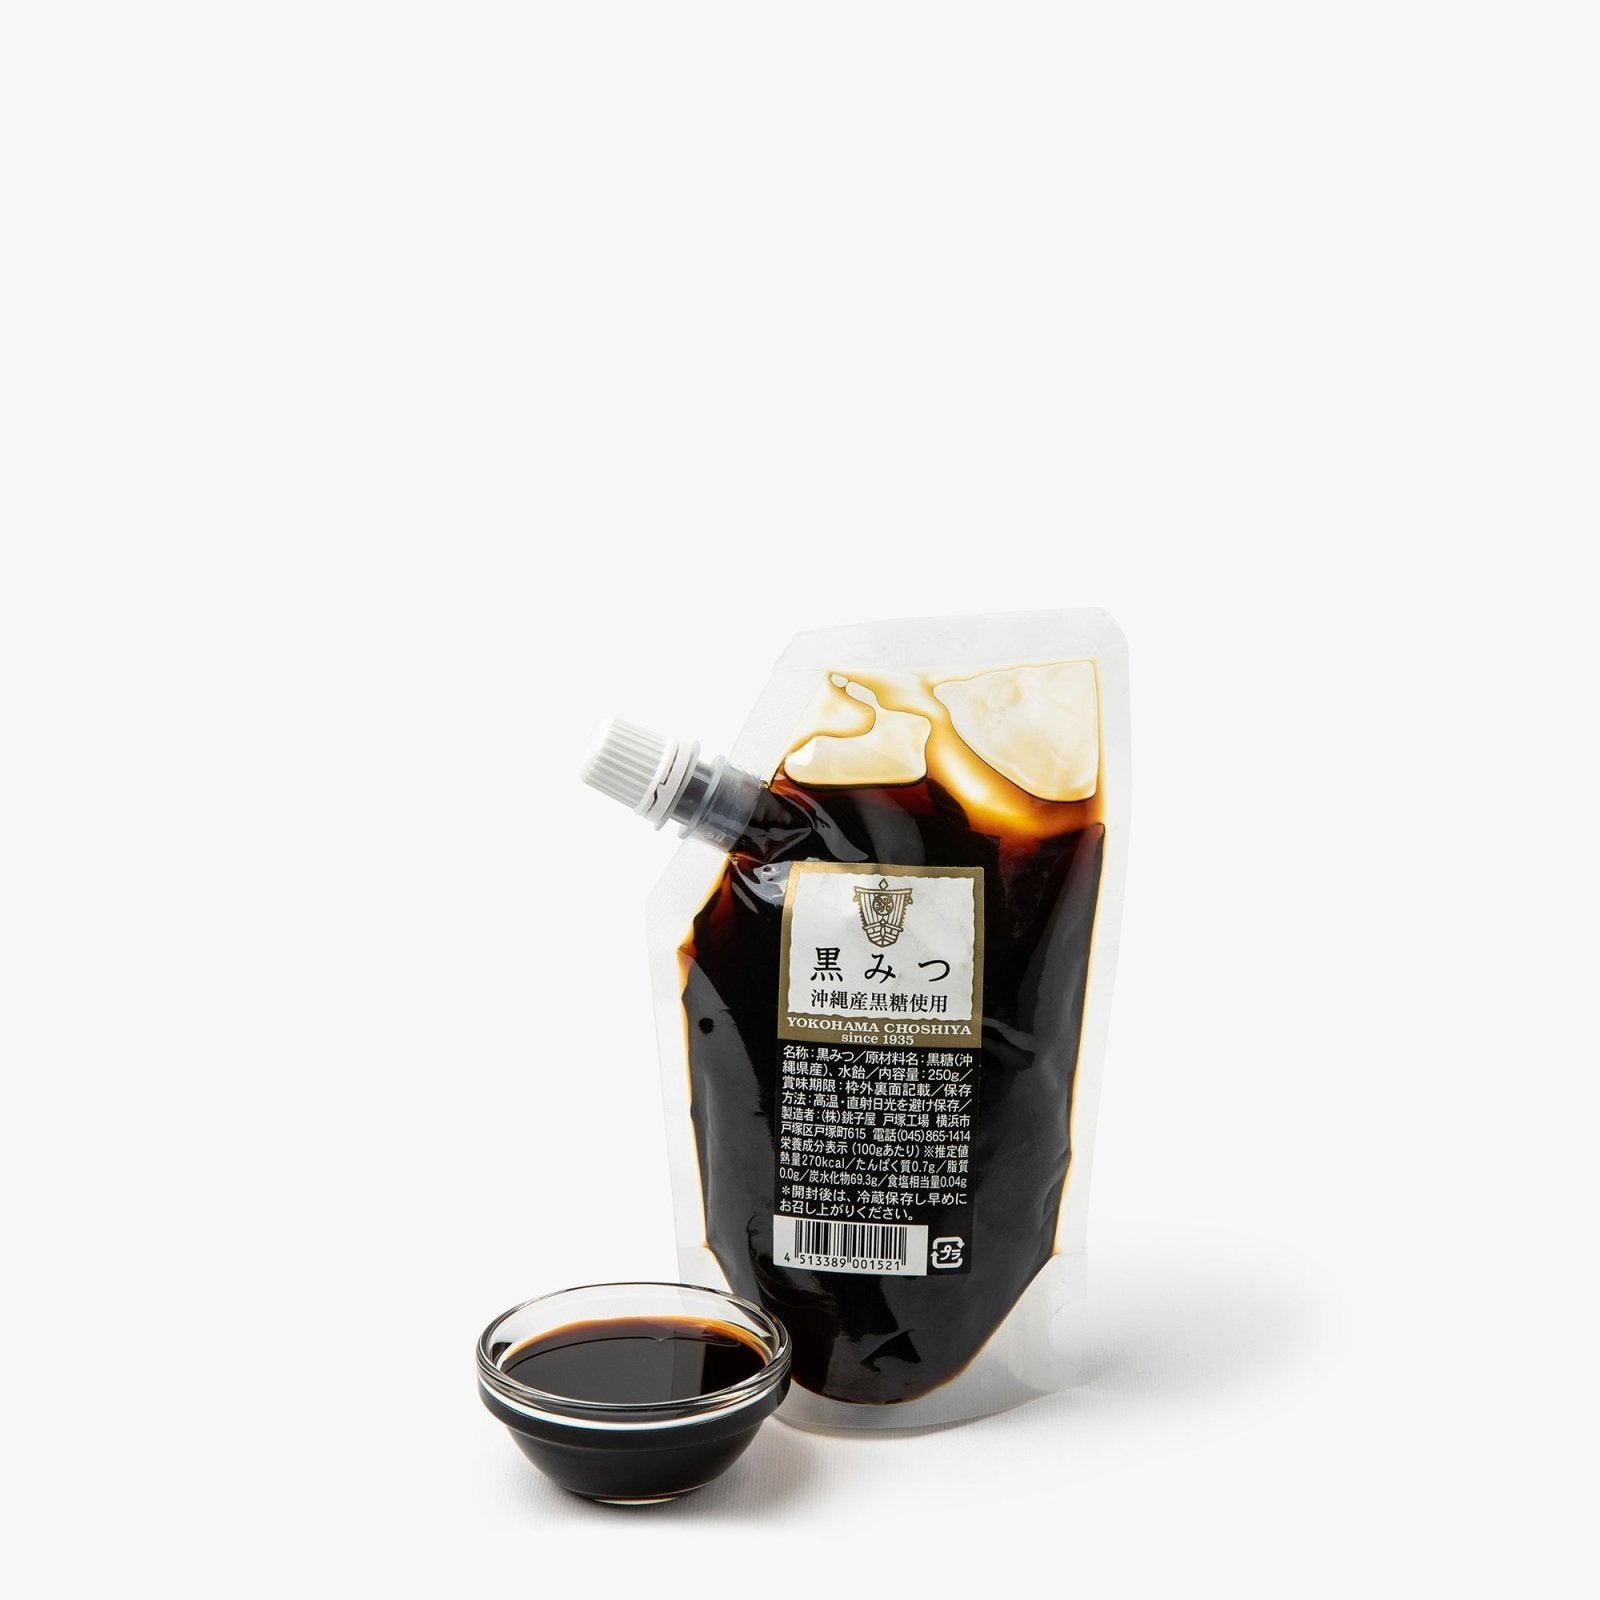 Sirop de sucre noir muscovado d'okinawa - 250g - Choshiya - iRASSHAi